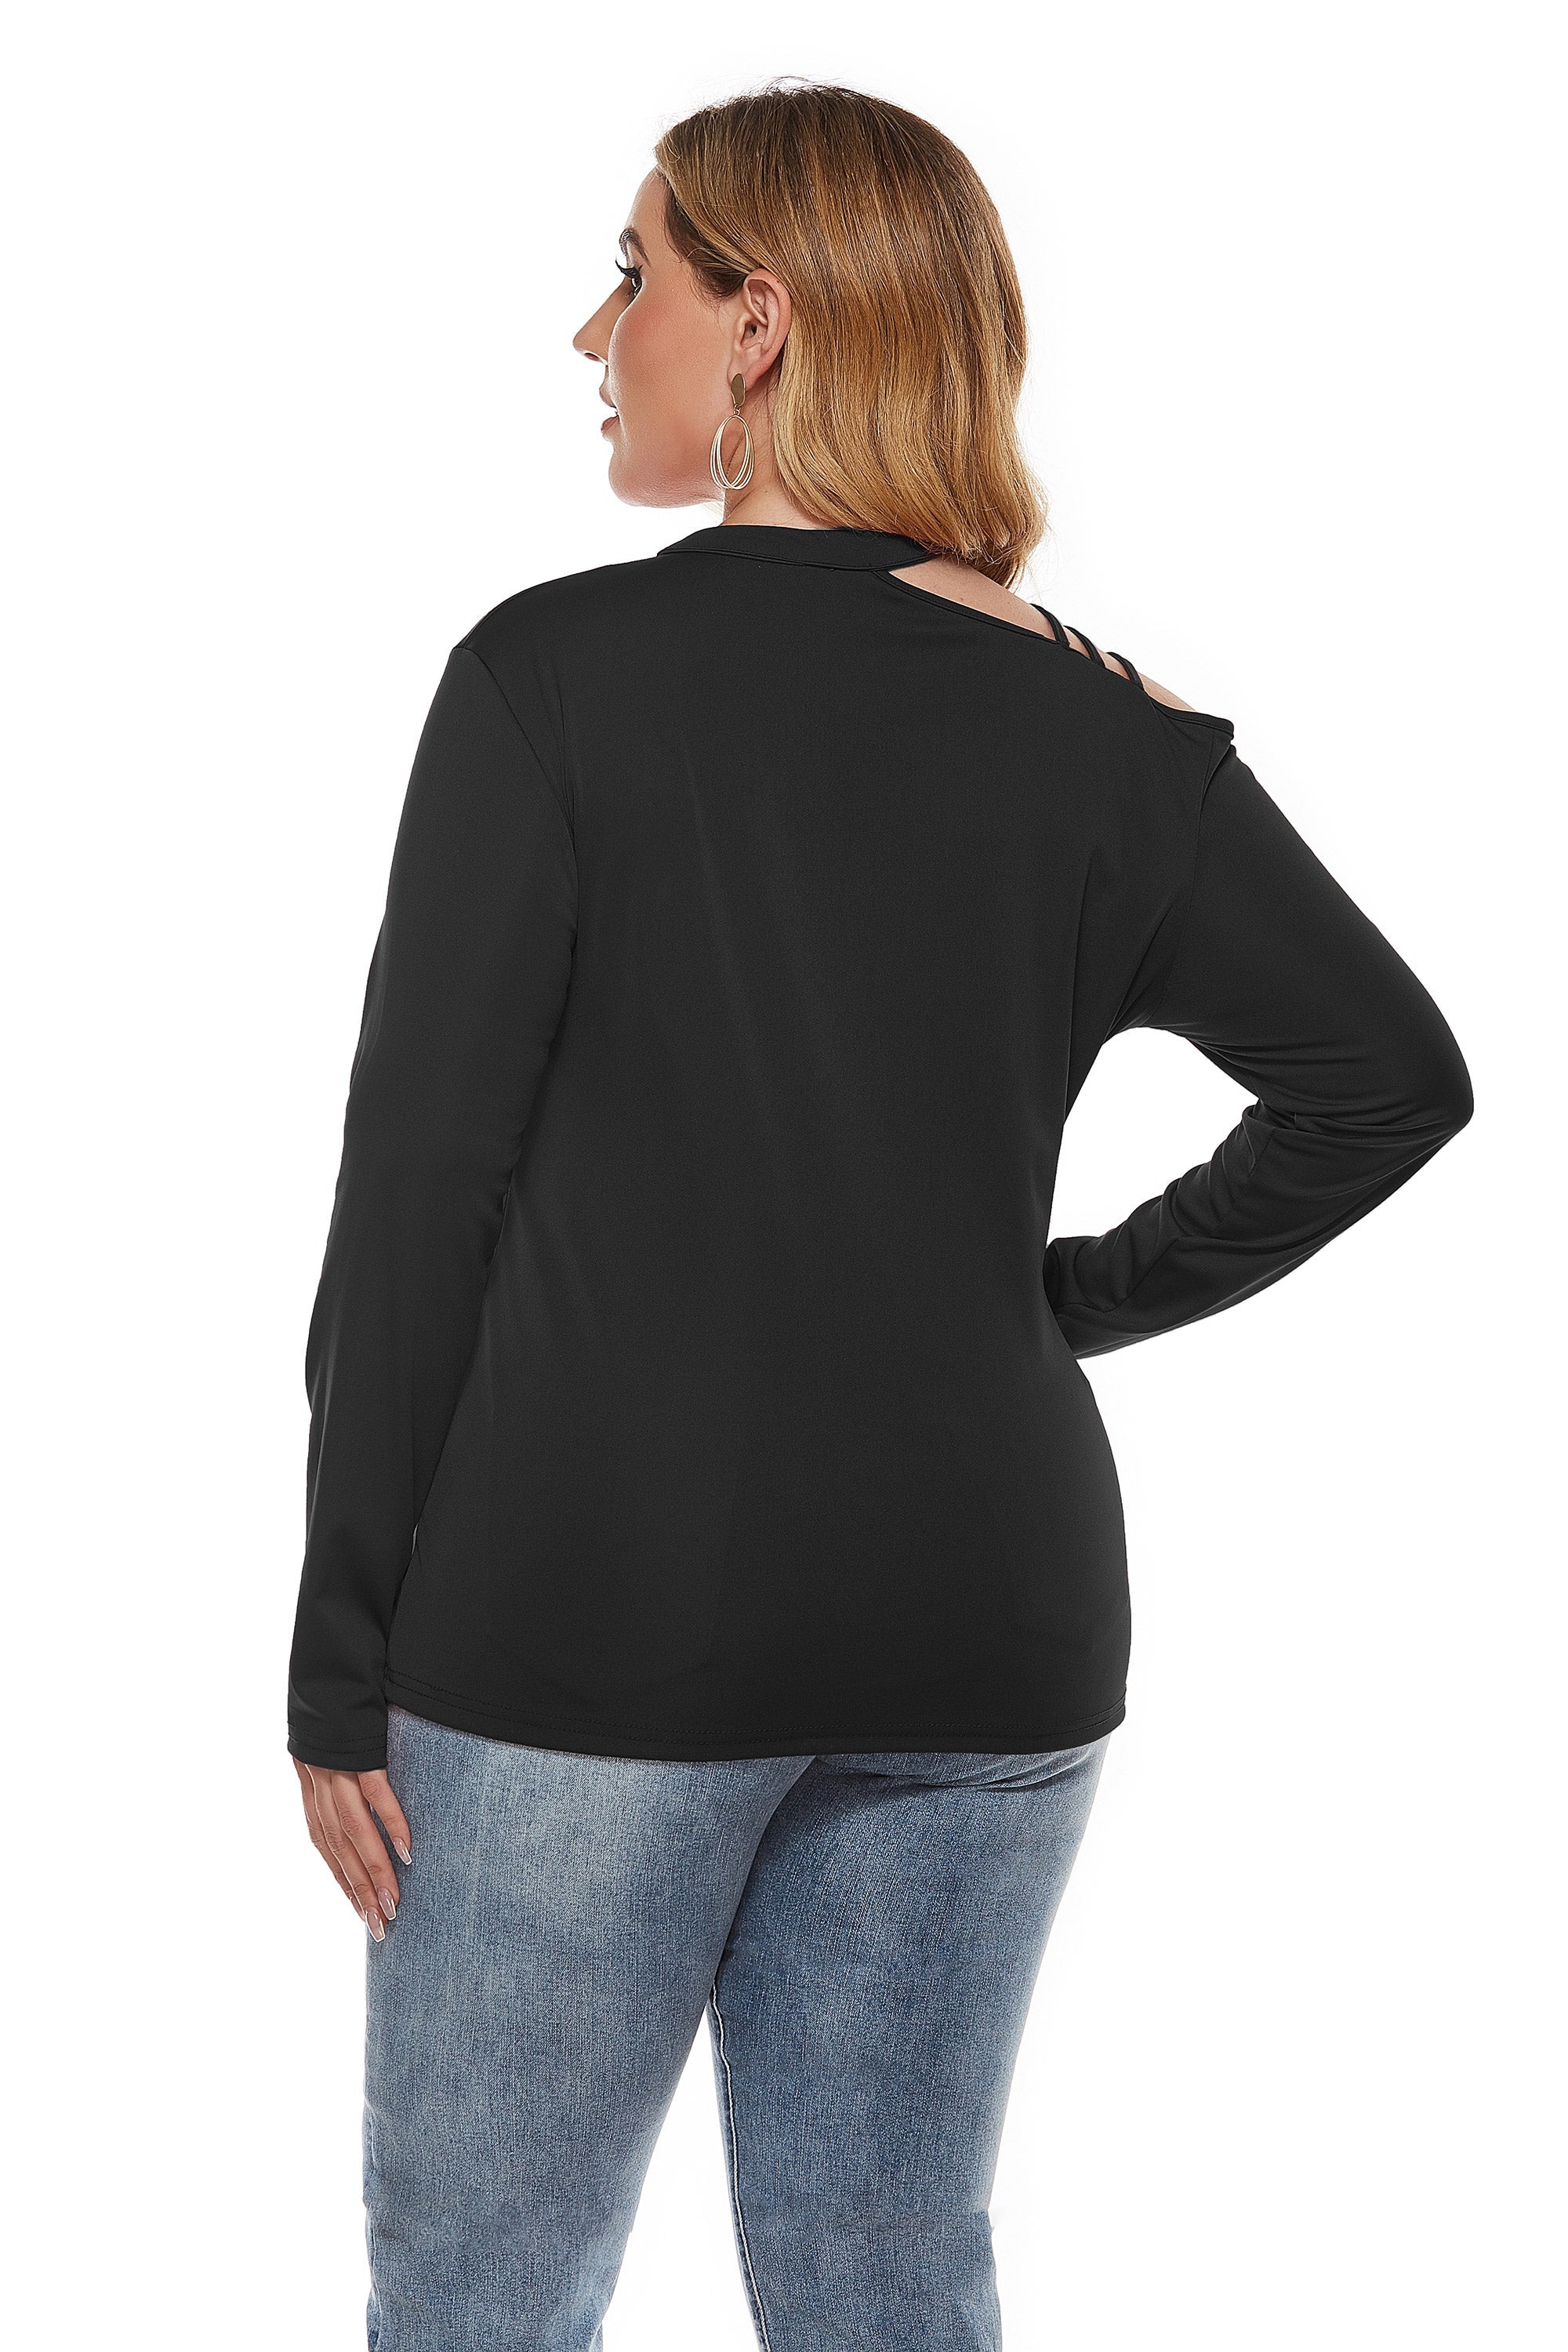 Women Plus Size Round Neck Irregular Top T-shirt Sai Feel